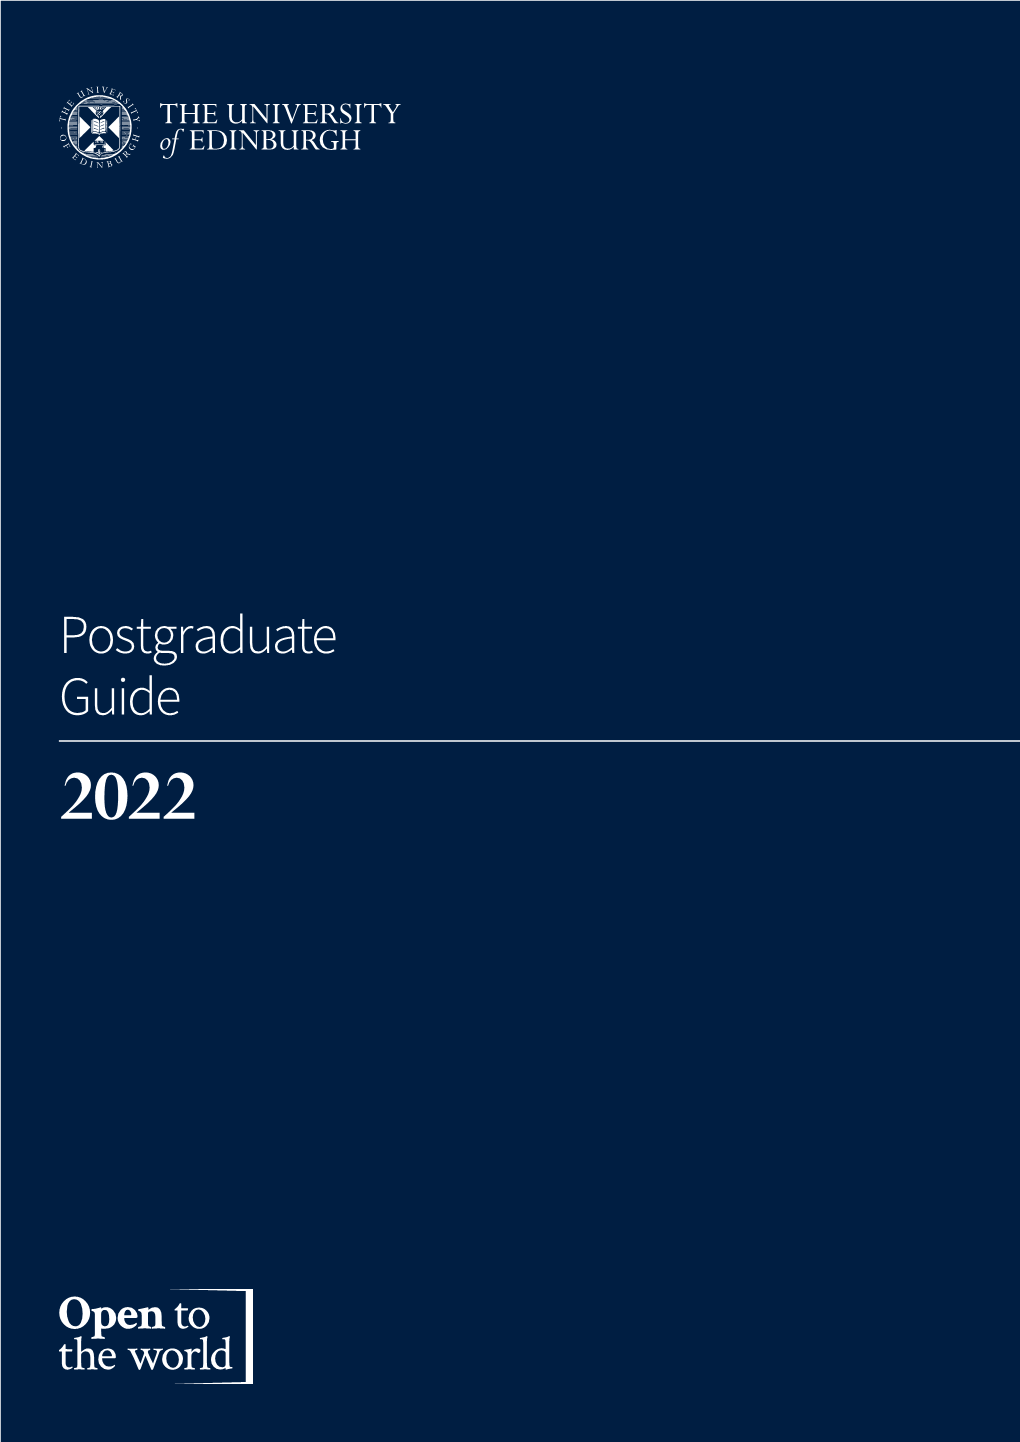 Postgraduate Guide 2022 Postgraduate Guide 2022 the University of Edinburgh 01